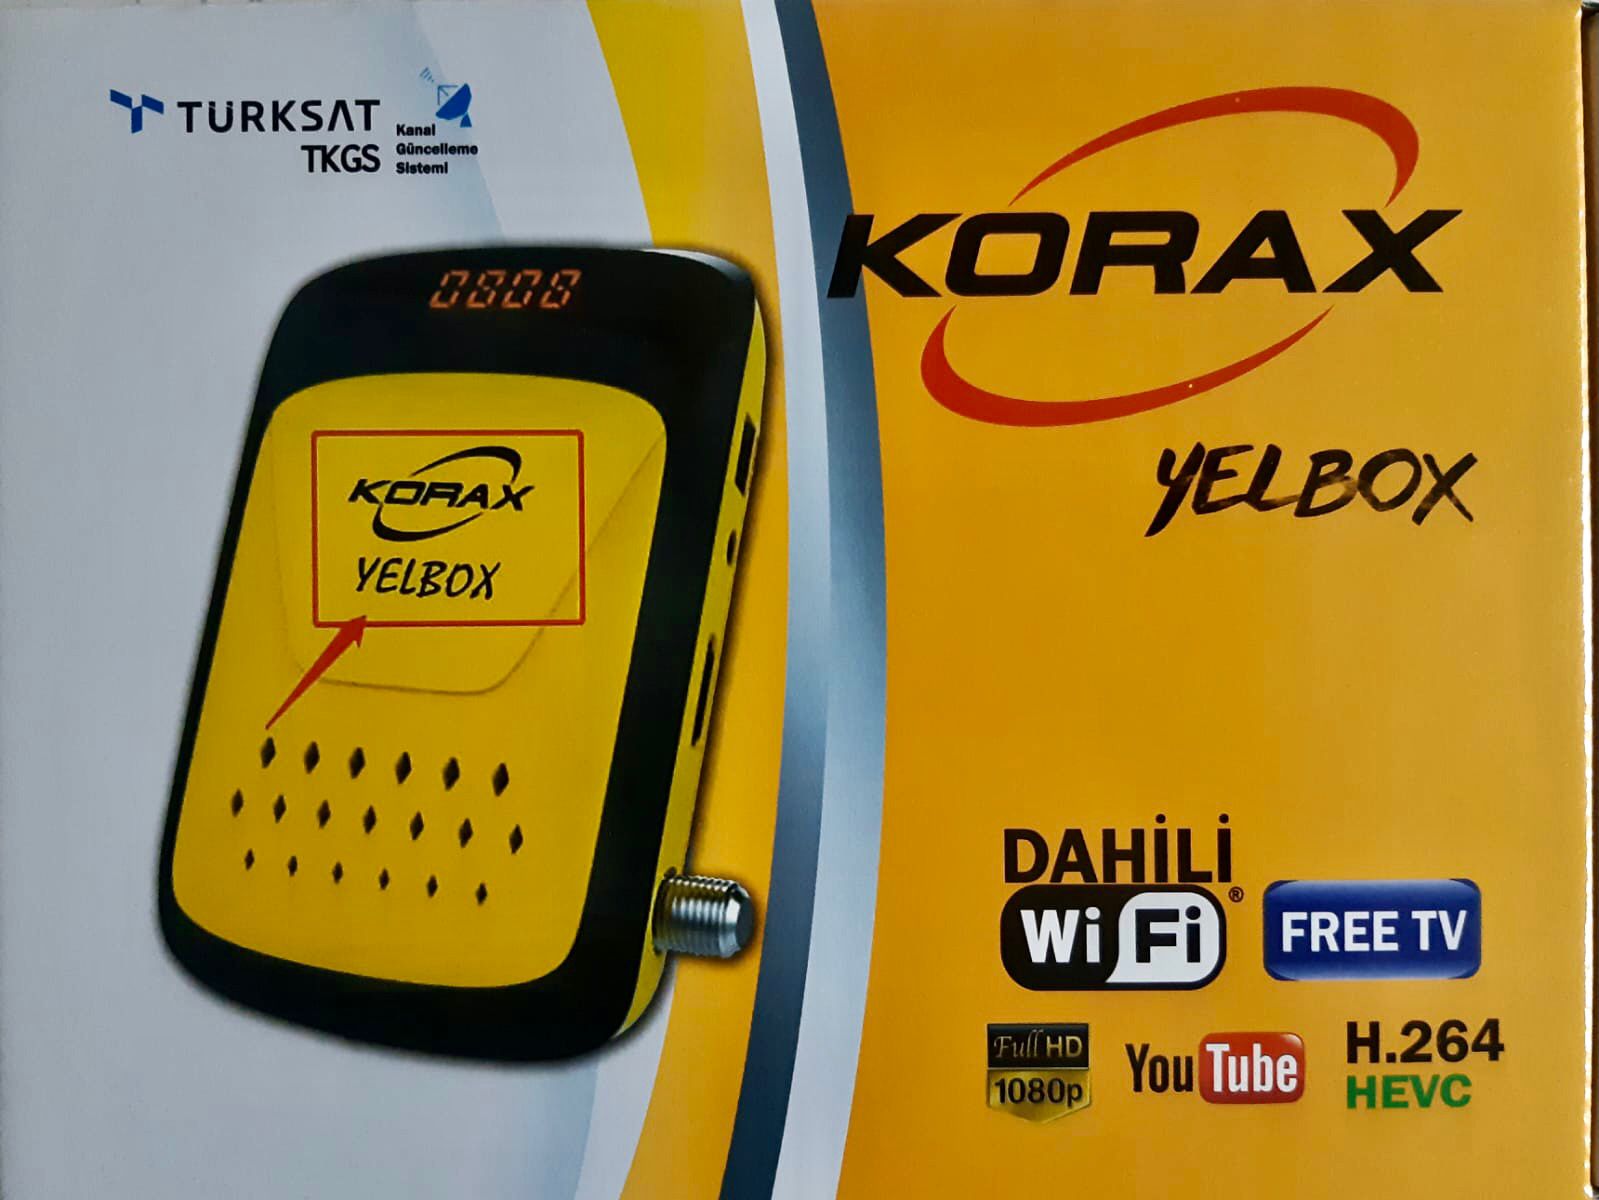 Korax Yelbox Dahili Wi-Fi Free Tv Özellikli Uydu Alıcı